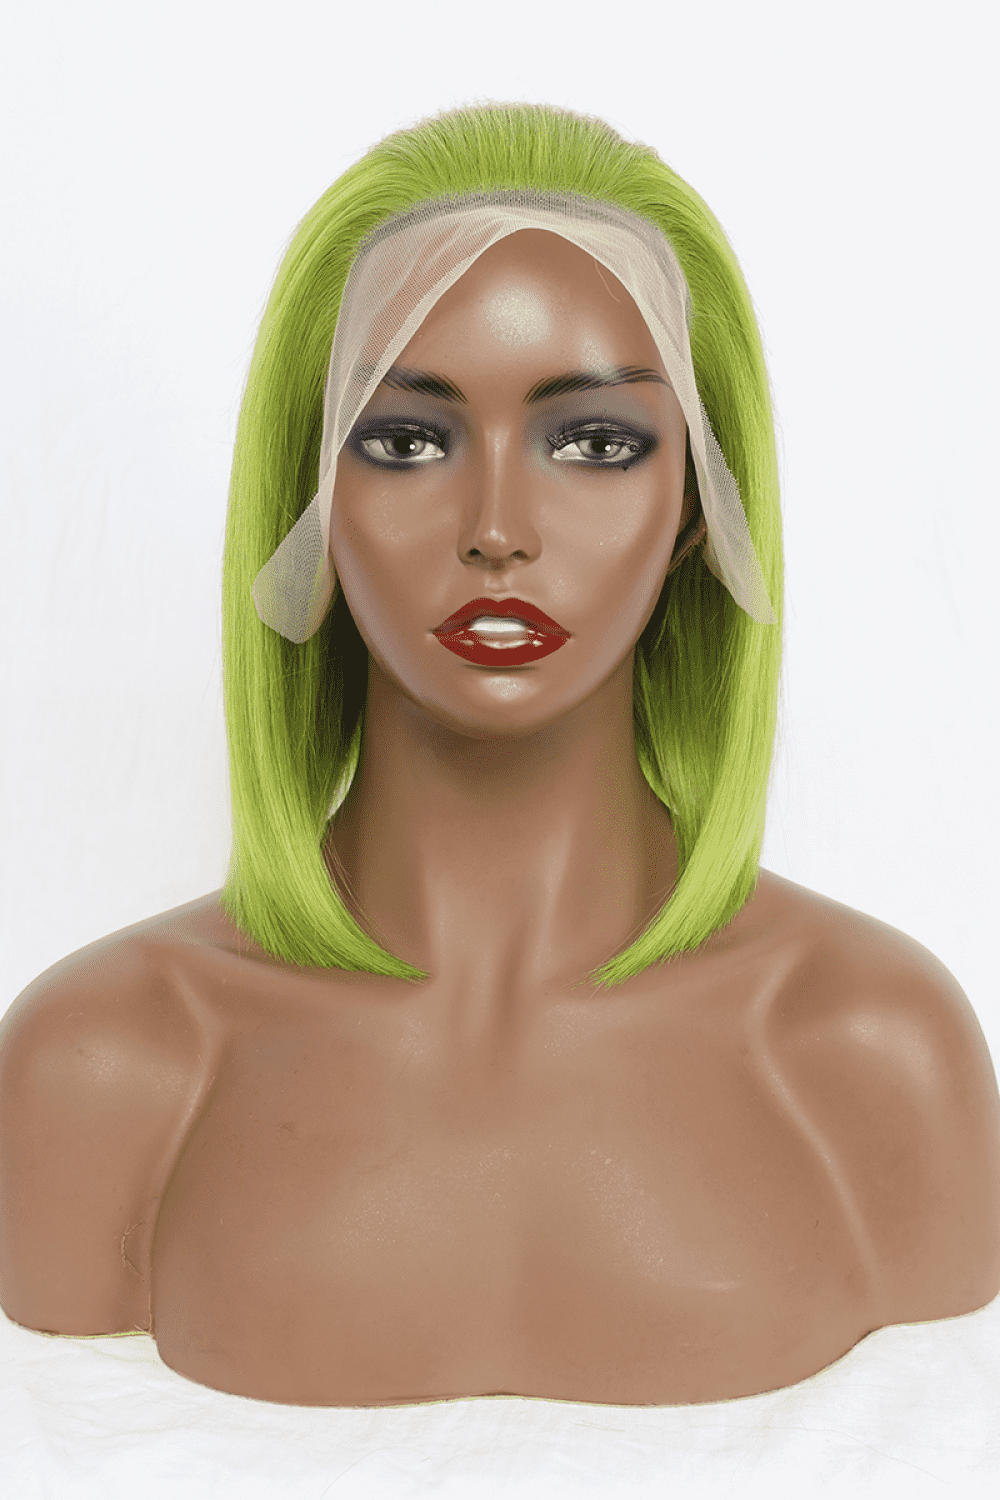 HUMAN HAIR 12" Green 165g Lace Front Wig Thick 150% Density Shoulder Length Bob